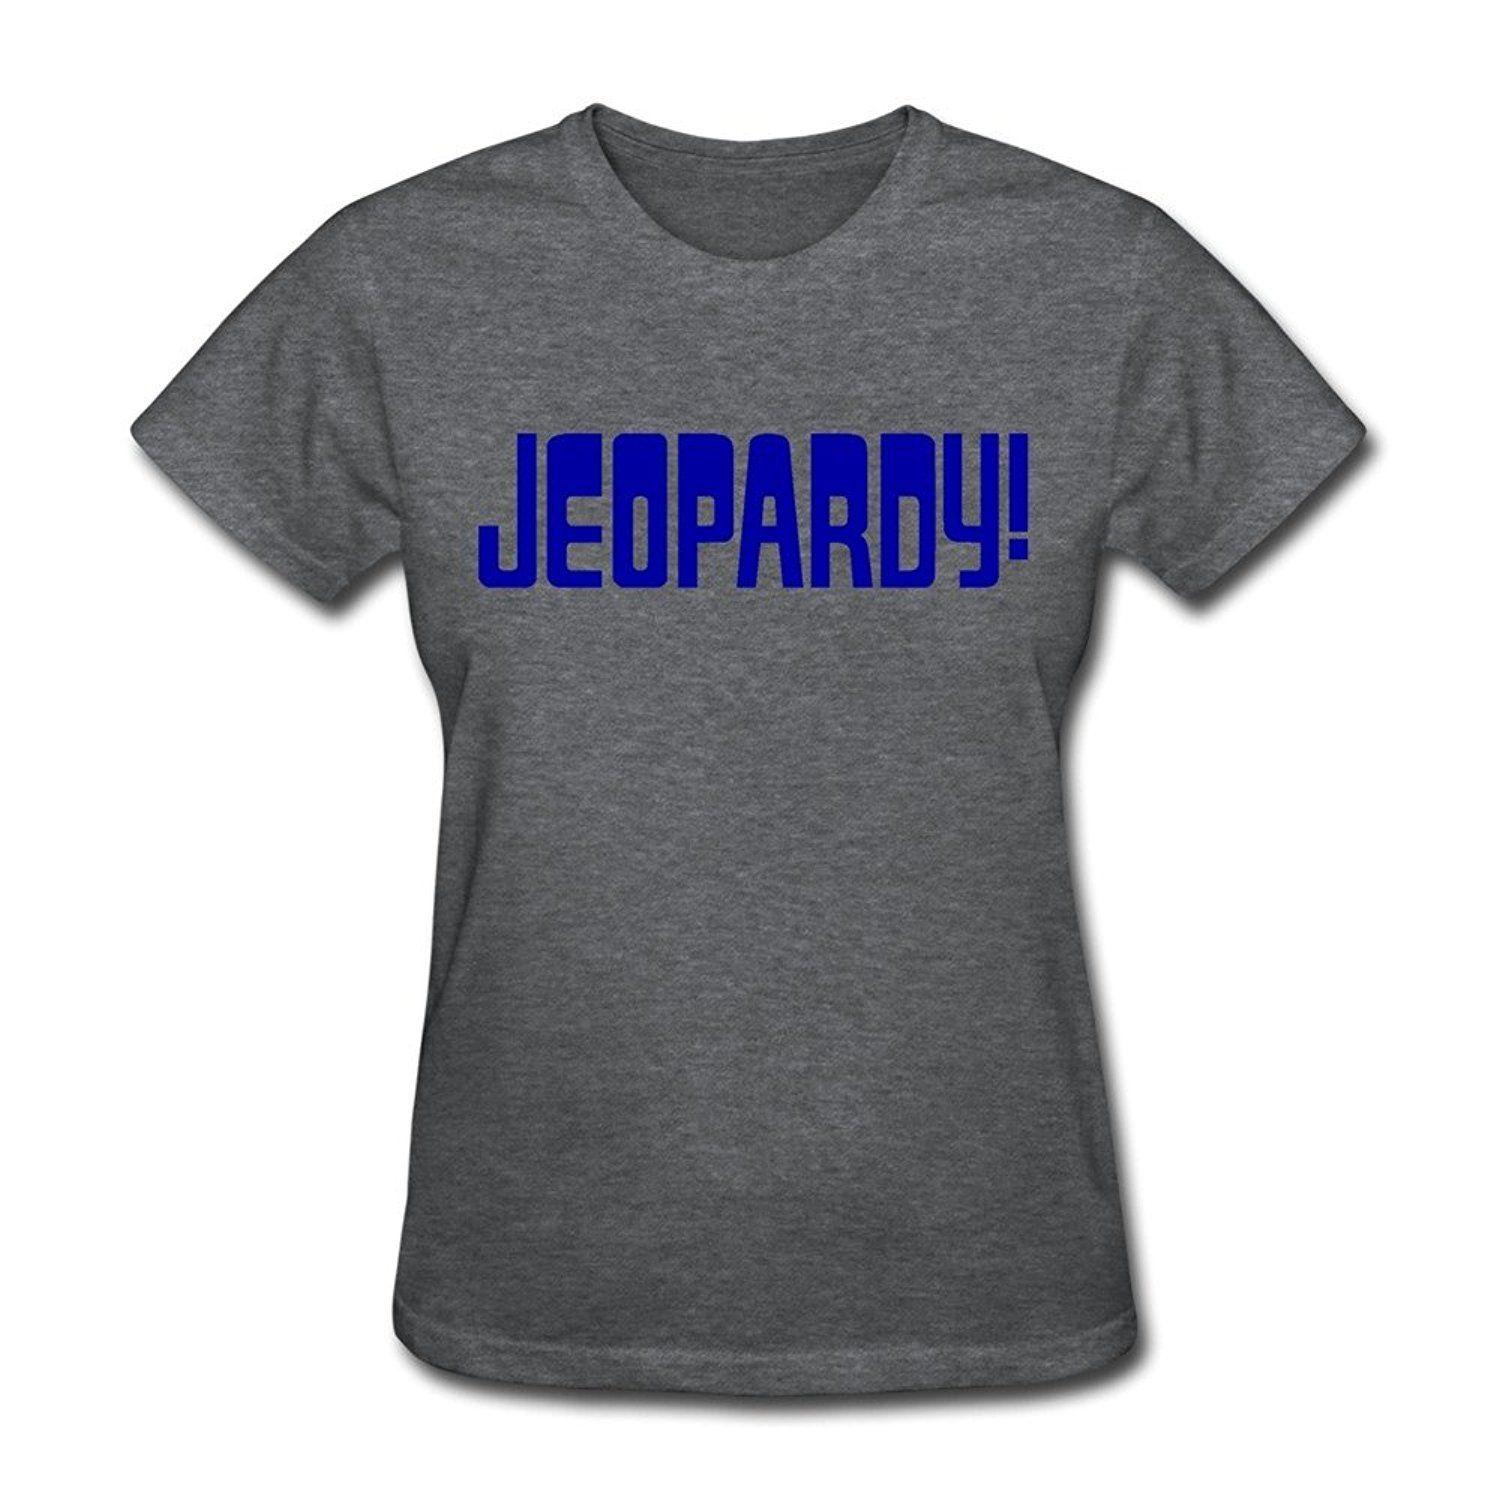 Jeopardy Logo - Amazon.com: Robeni Women's Deep Heather Jeopardy! Logo T-Shirt: Clothing